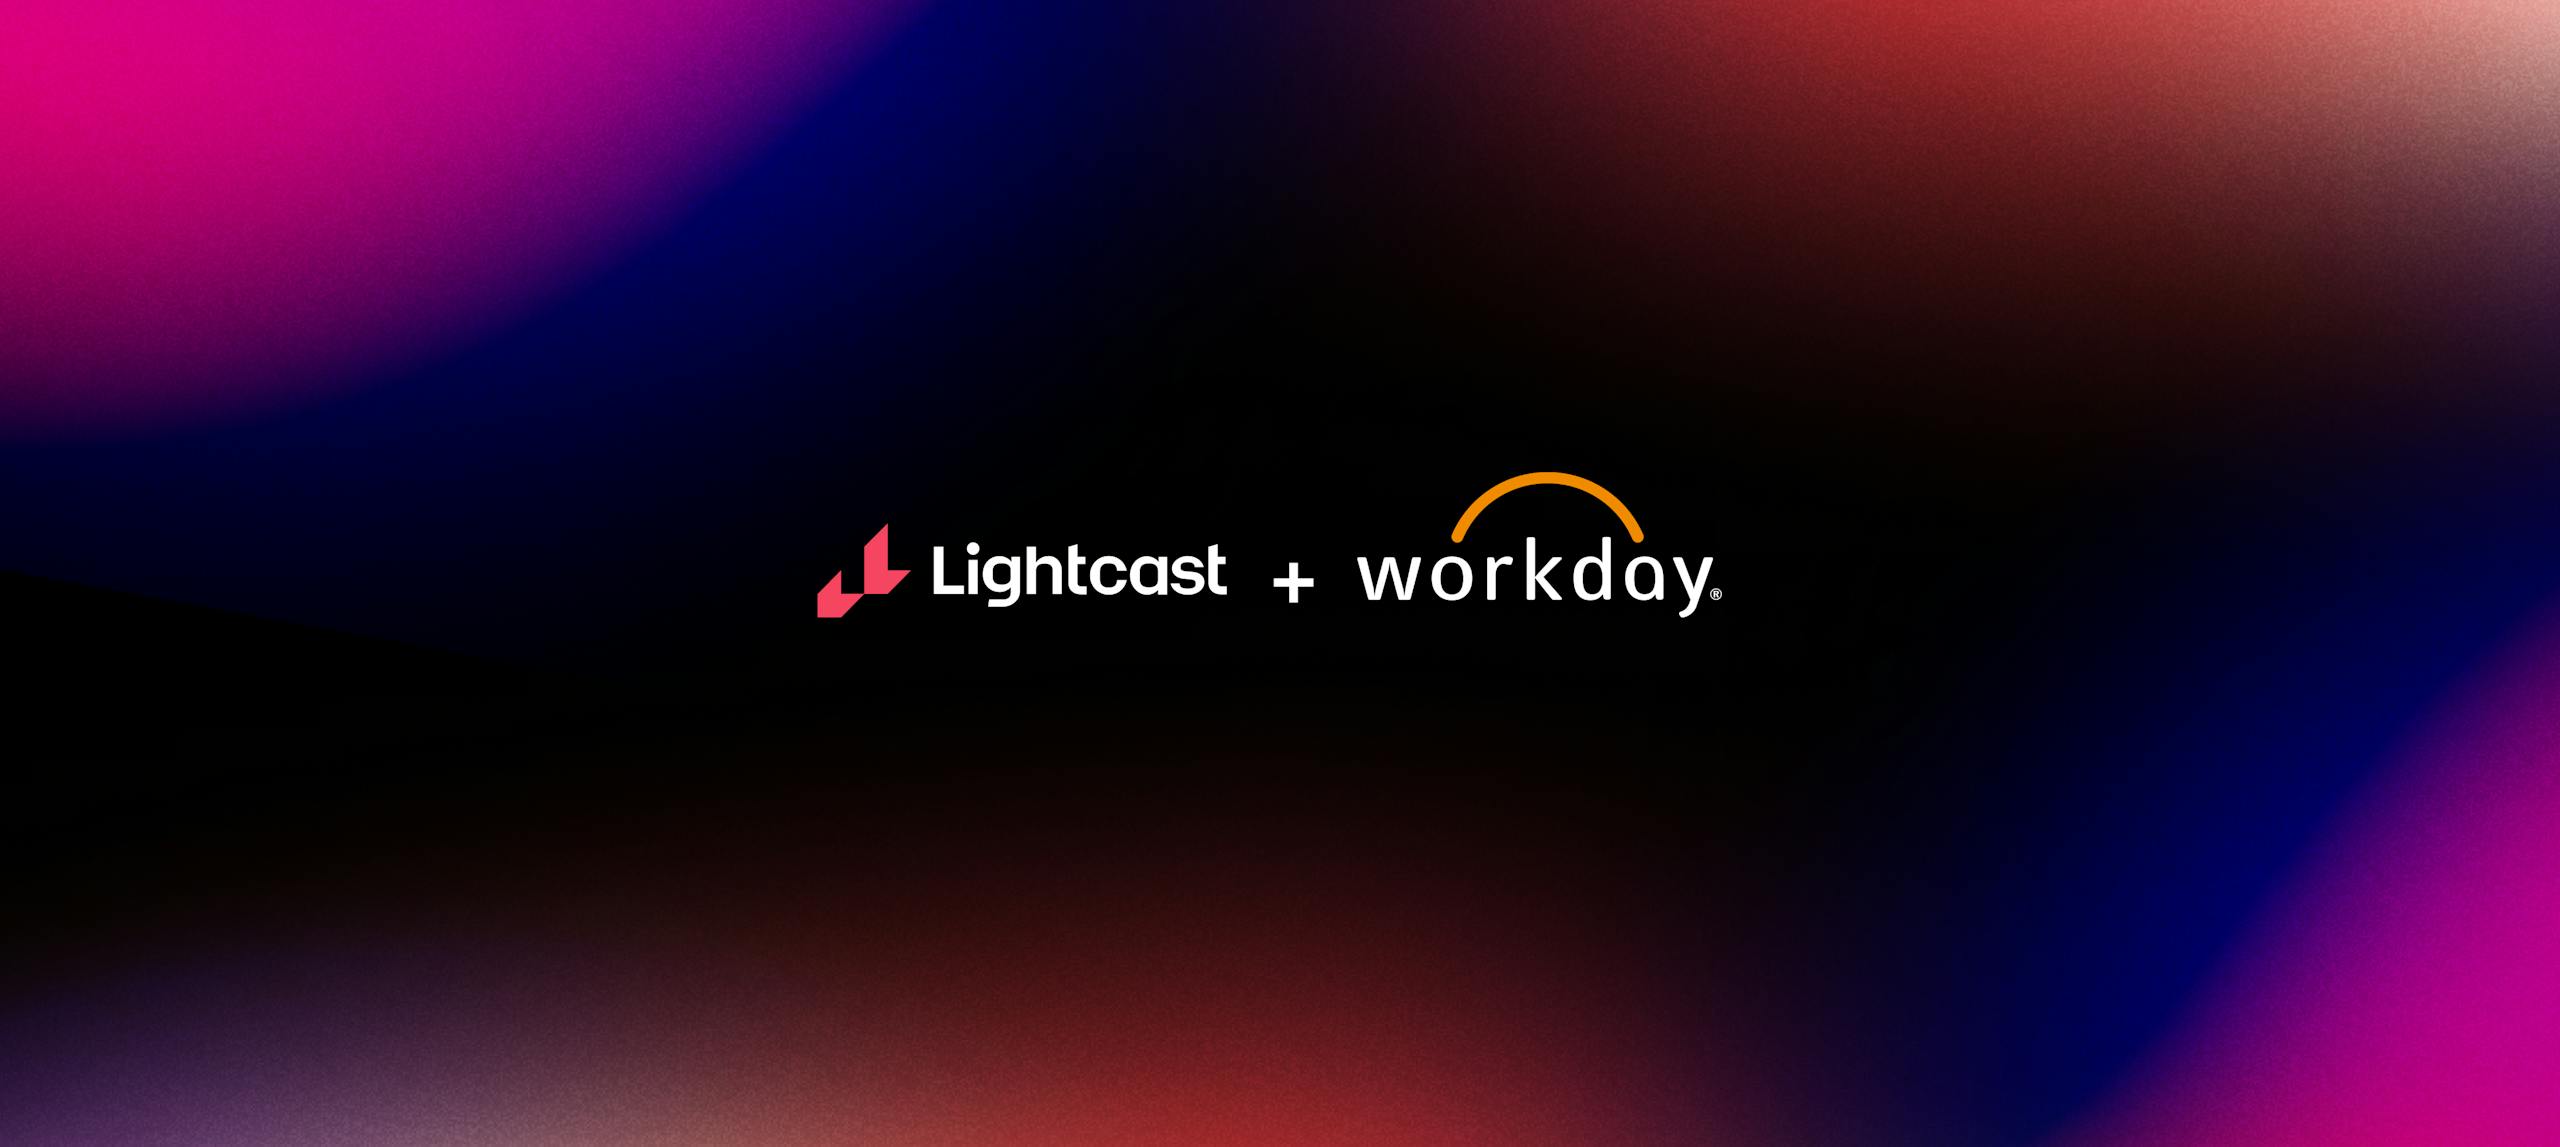 Workday and Lightcast